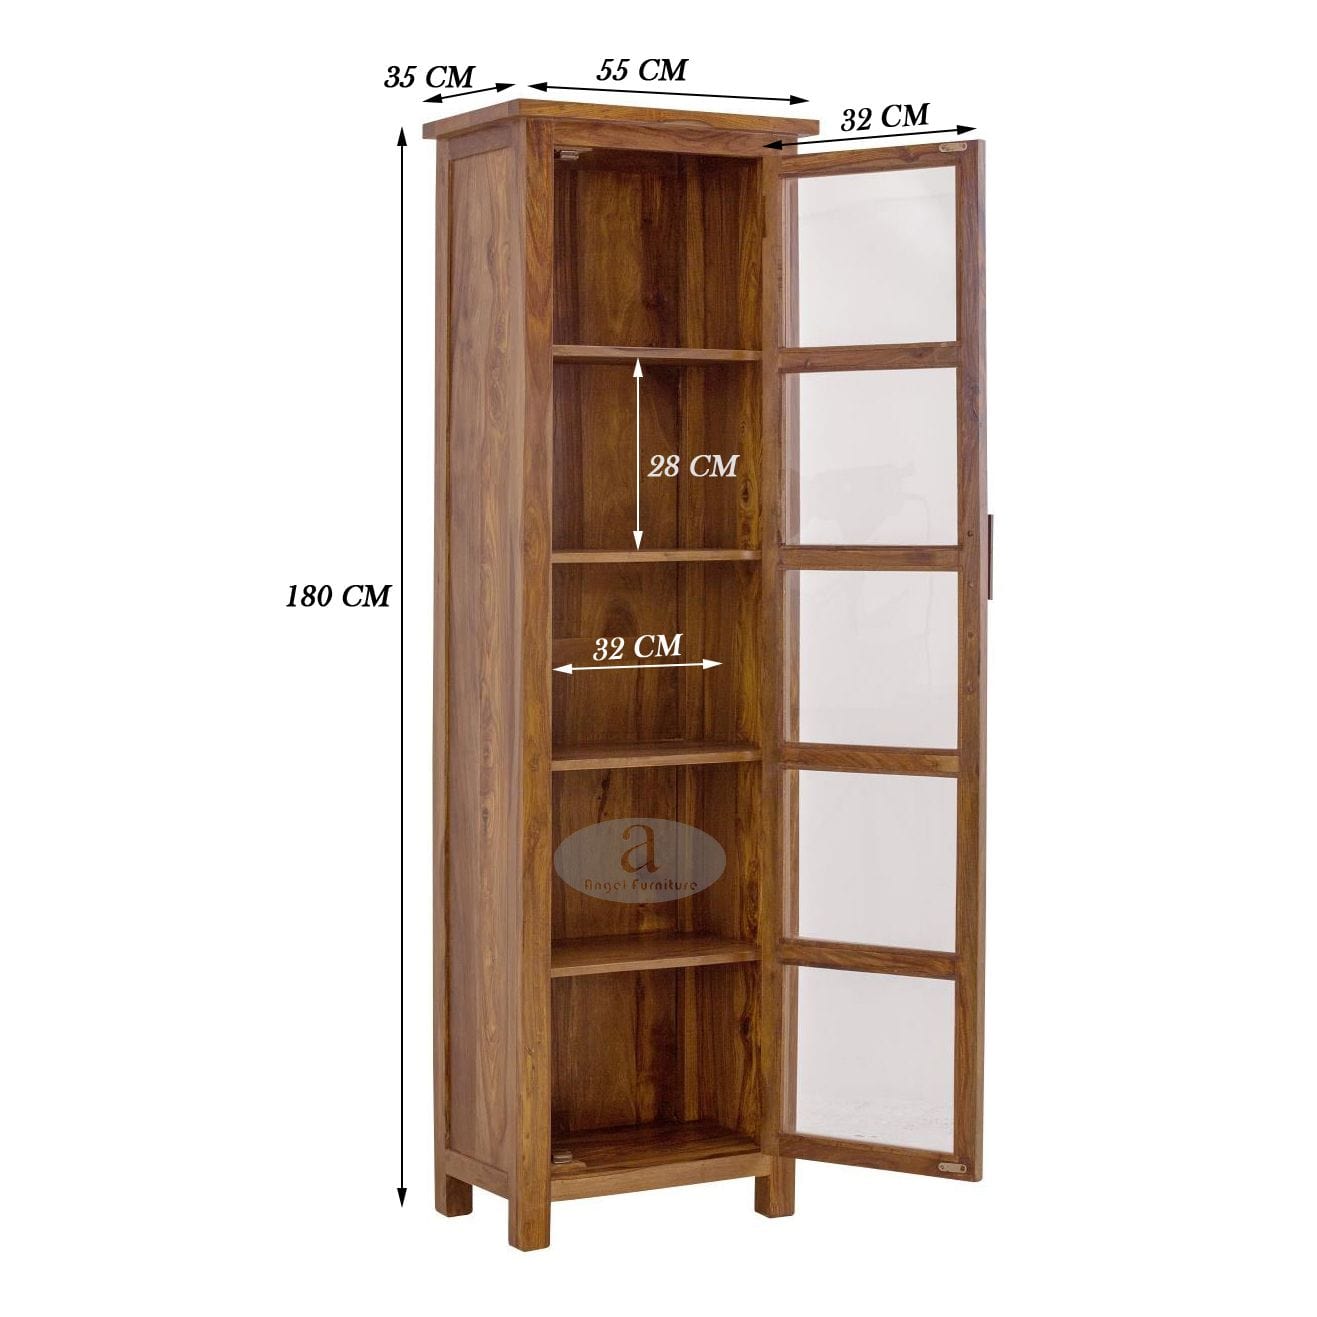 Sheesham Wood Single Door Crockery Cabinet Tall In Honey Finish